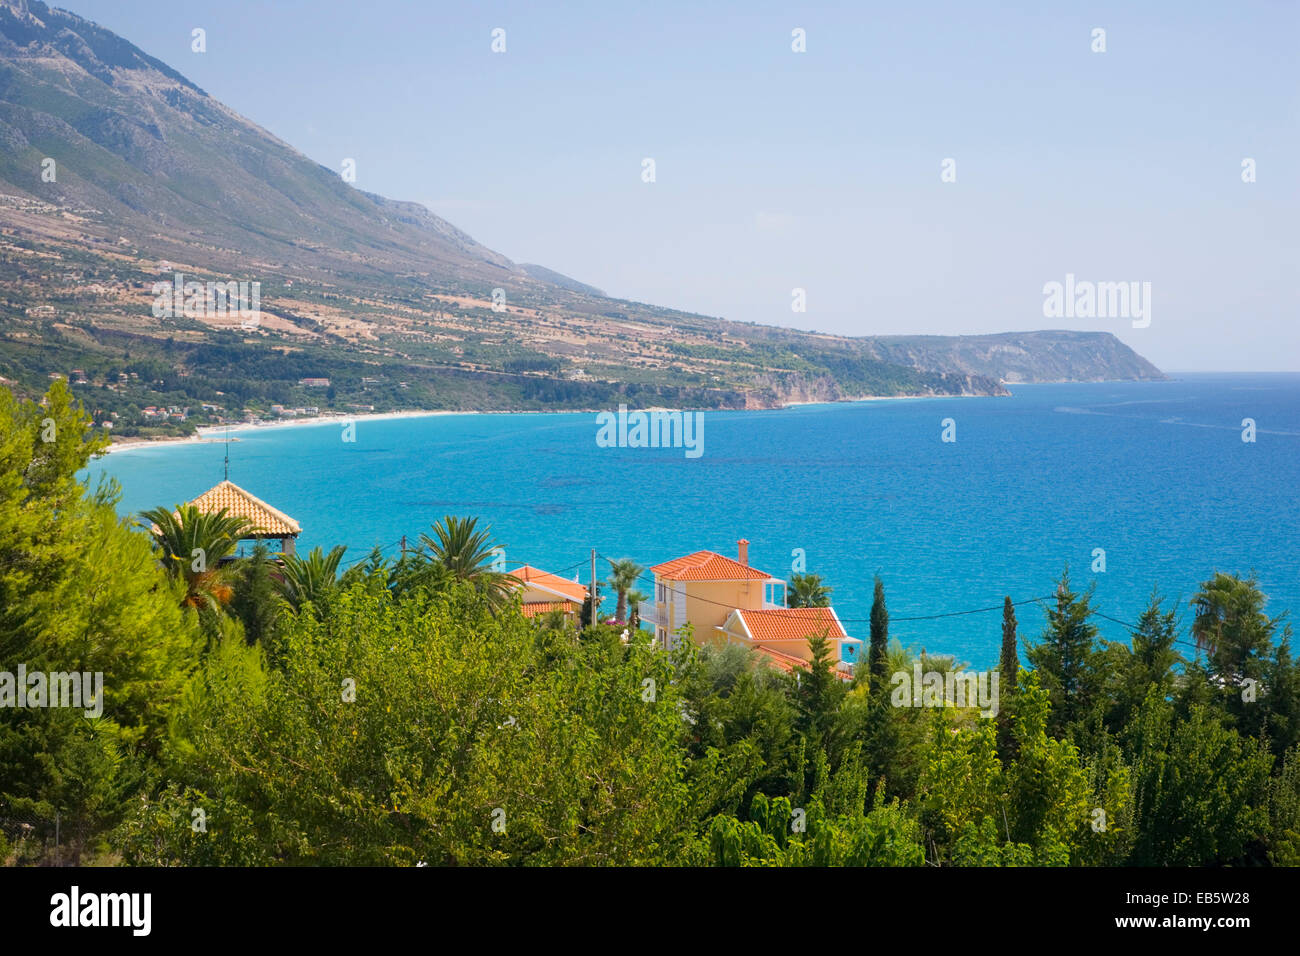 Lourdata, Kefalonia, Ionian Islands, Greece. View across the turquoise waters of Lourdata Bay, Lourdas Beach prominent. Stock Photo